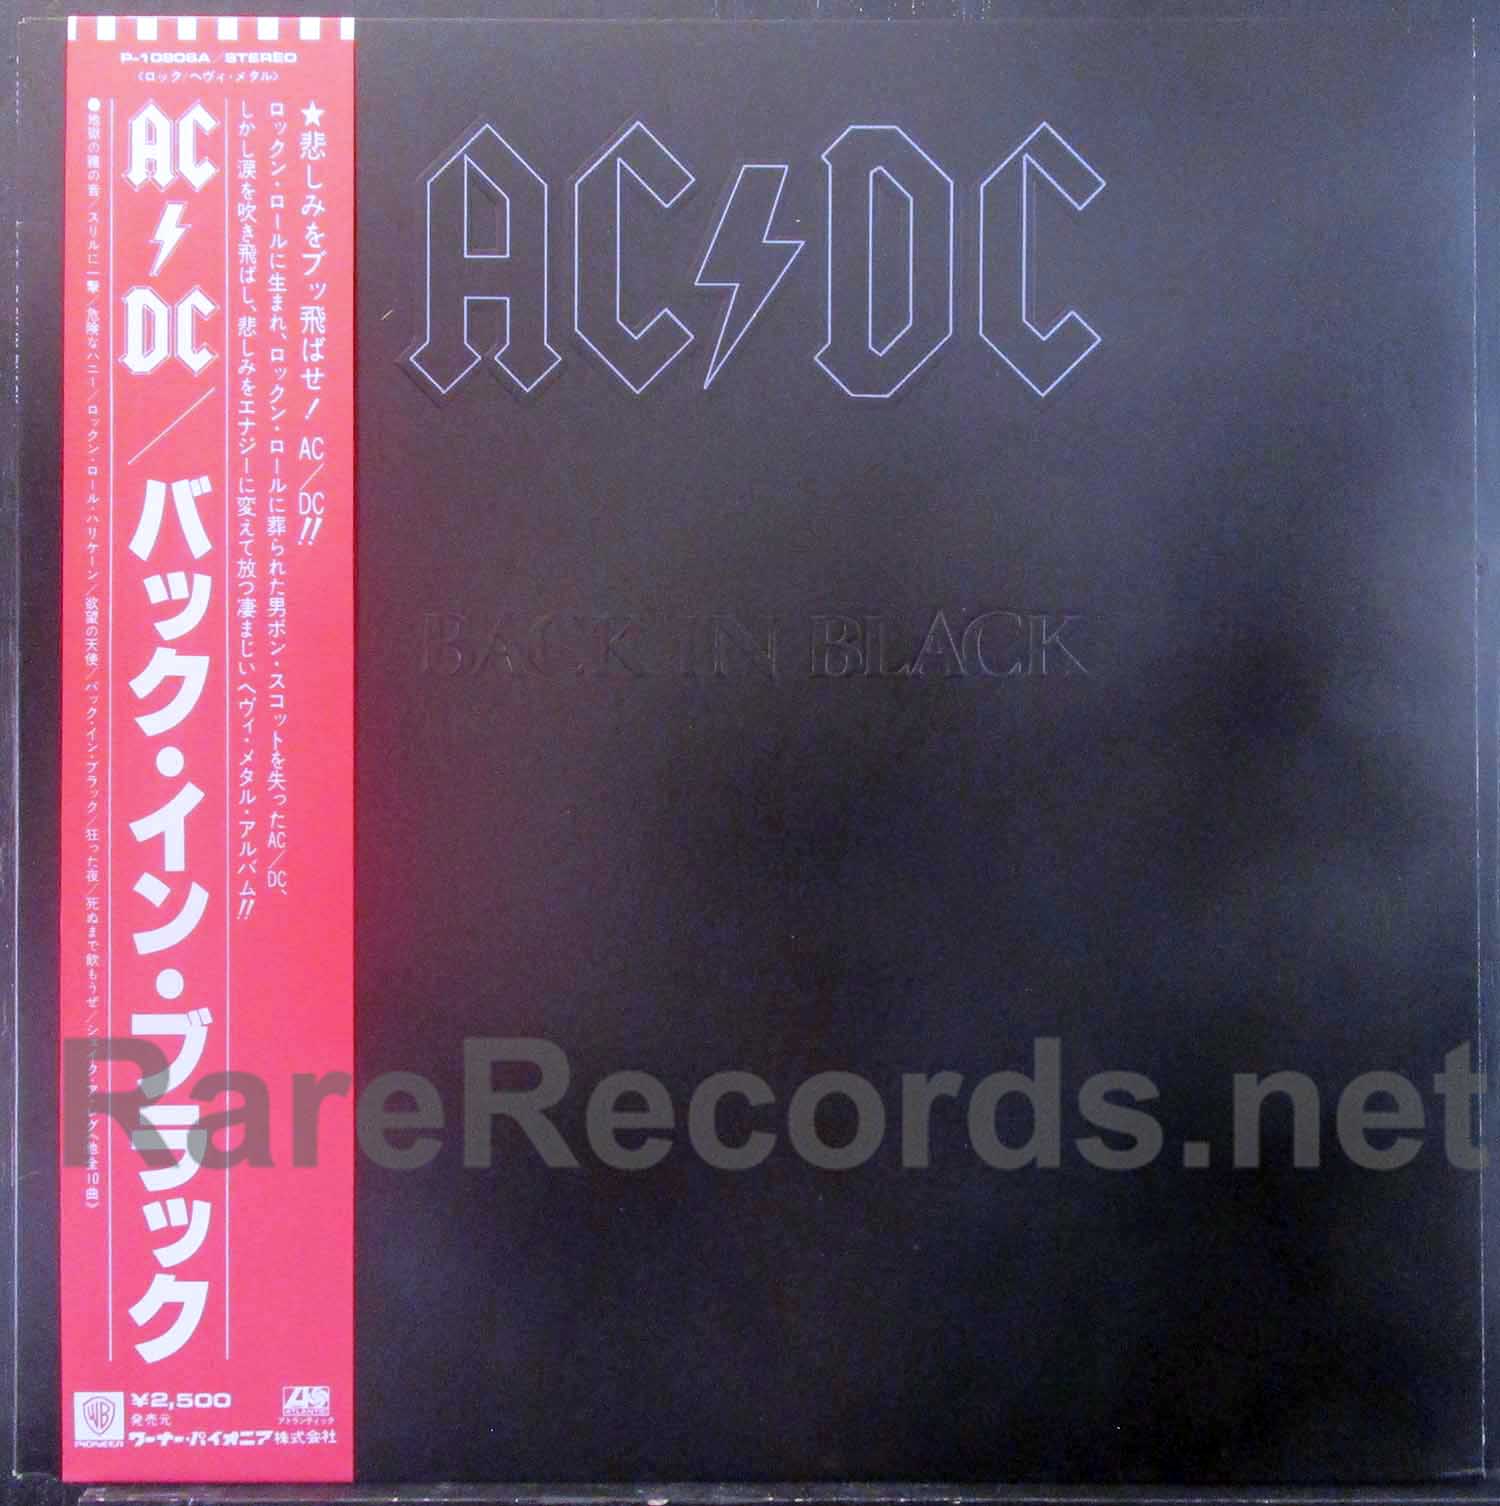 AC/DC バック・イン・ブラック LPレコード | www.esn-ub.org